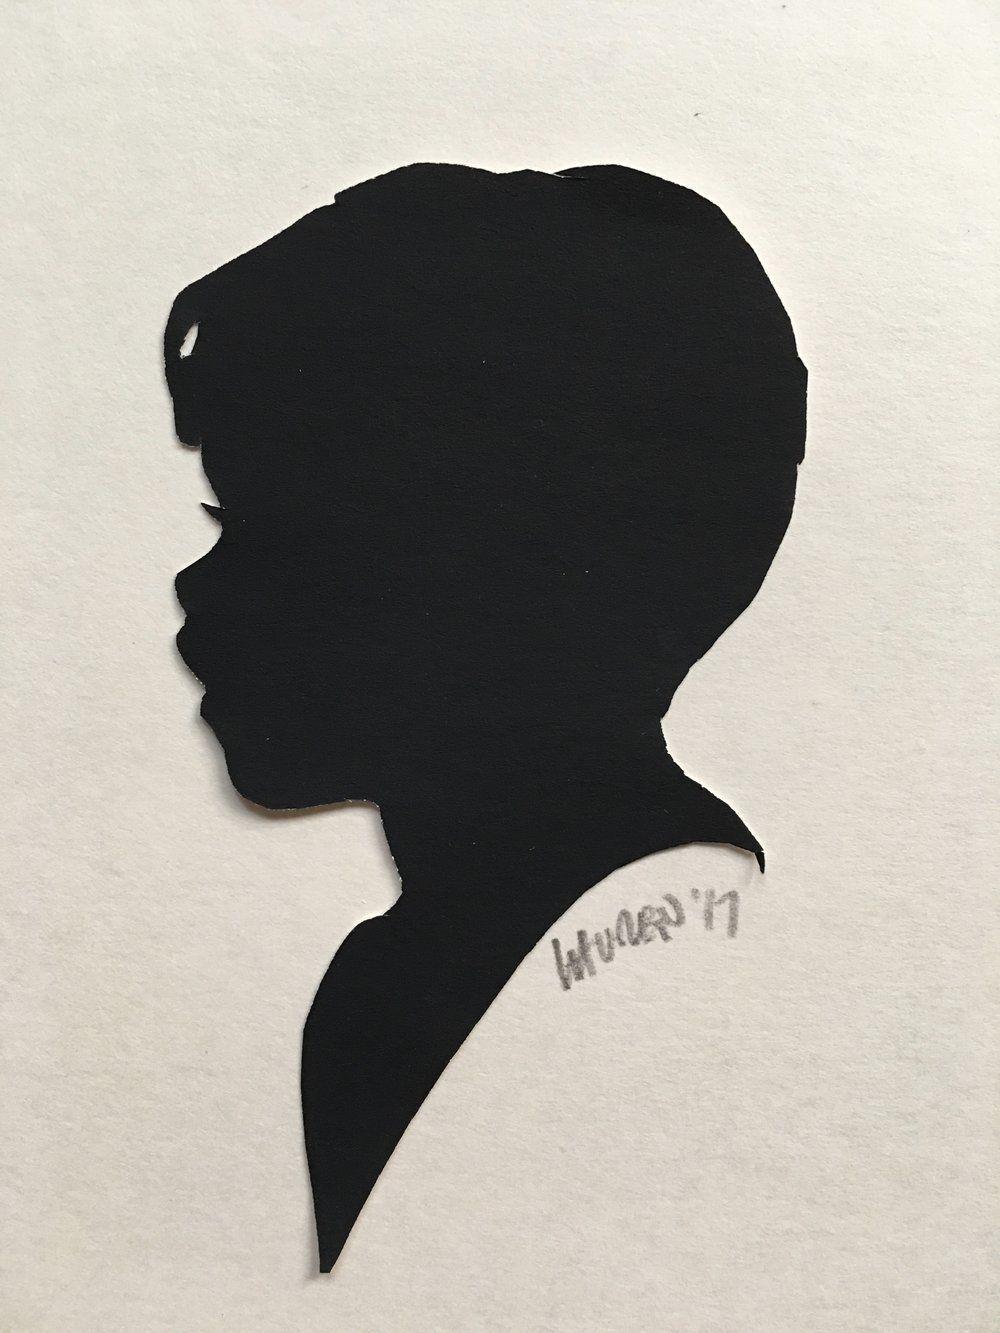 Black Silhouette Head Logo - Additional BLACK Silhouette Portrait Copies (per copy) — Silhouettes ...